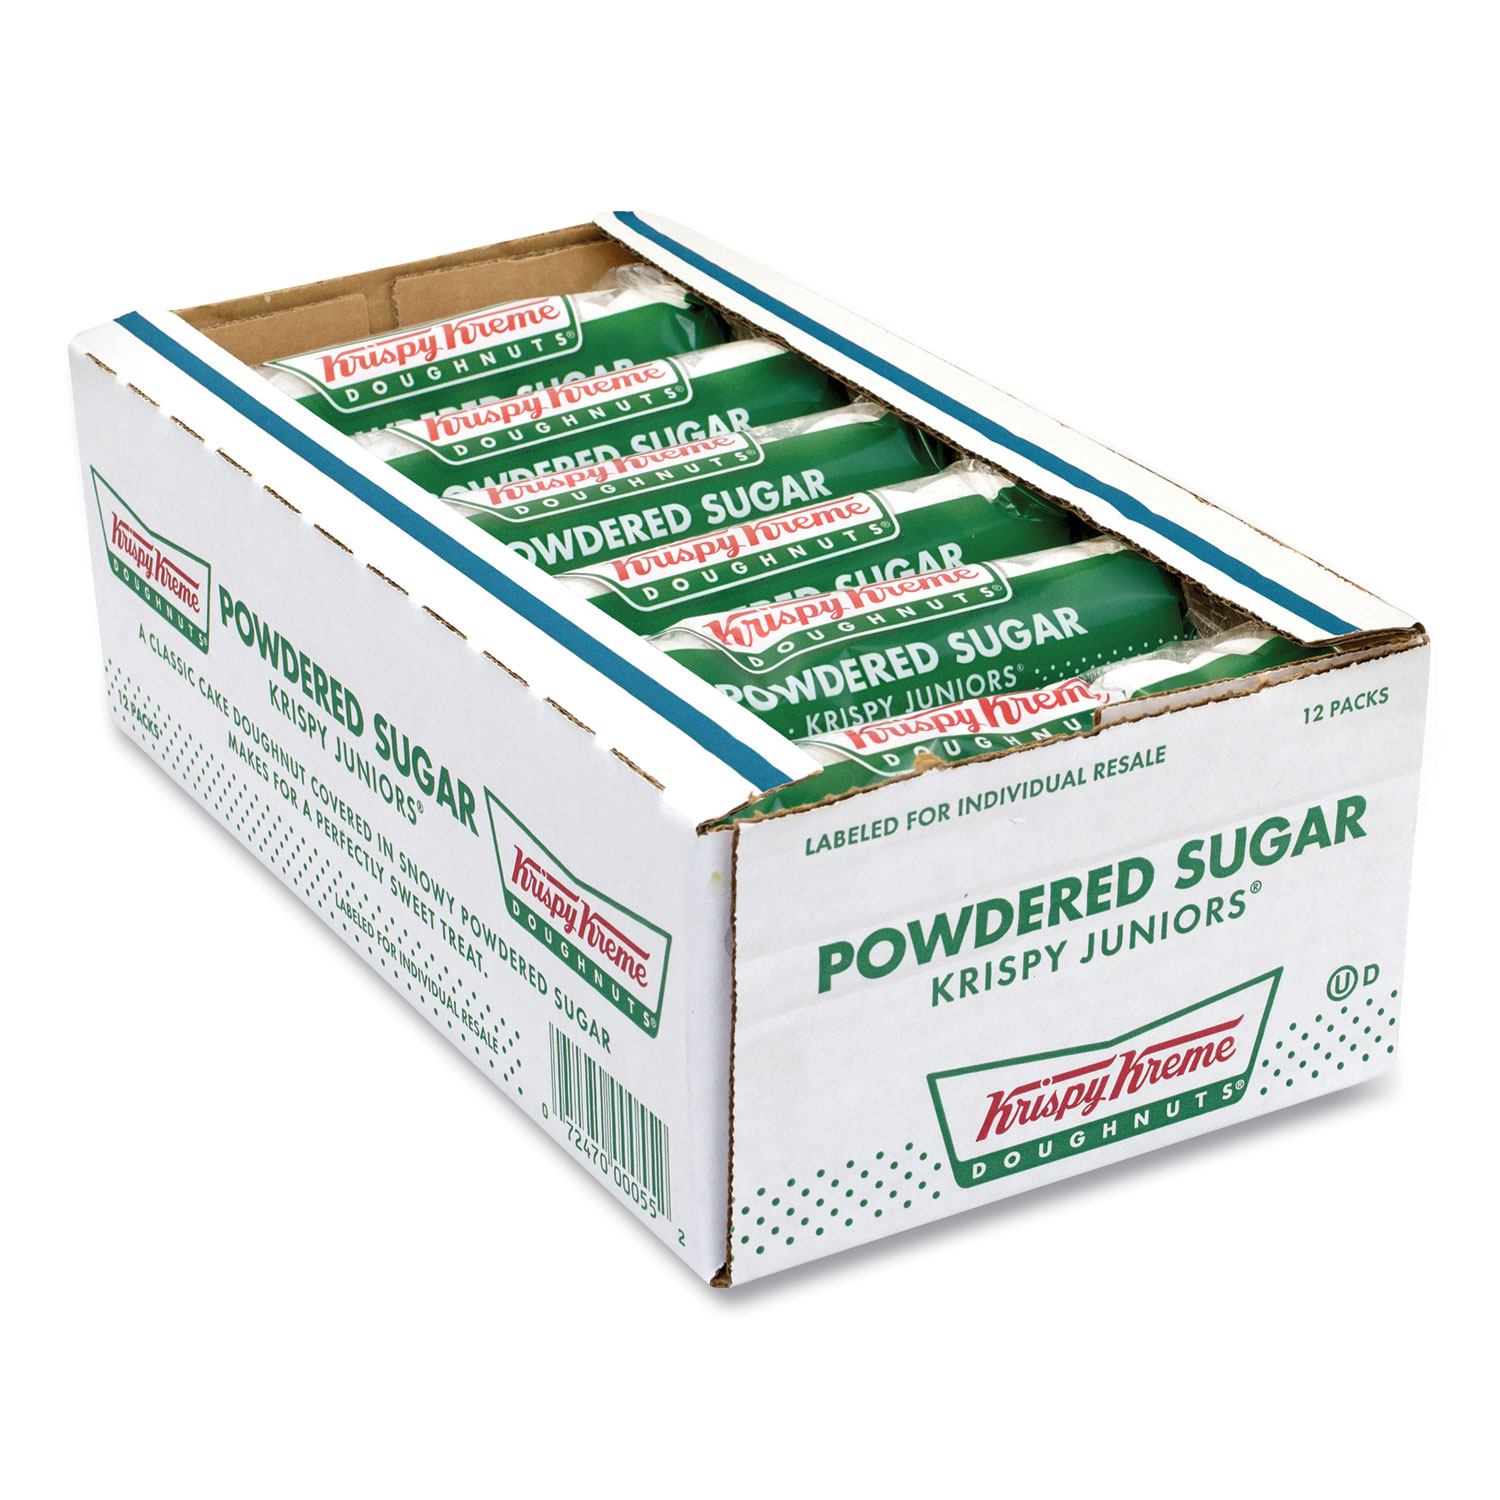  Krispy Kreme GD100F Powdered Sugar Doughnuts, 3 oz Pack, 12 Packs/Box, Free Delivery in 1-4 Business Days (GRR90300110) 